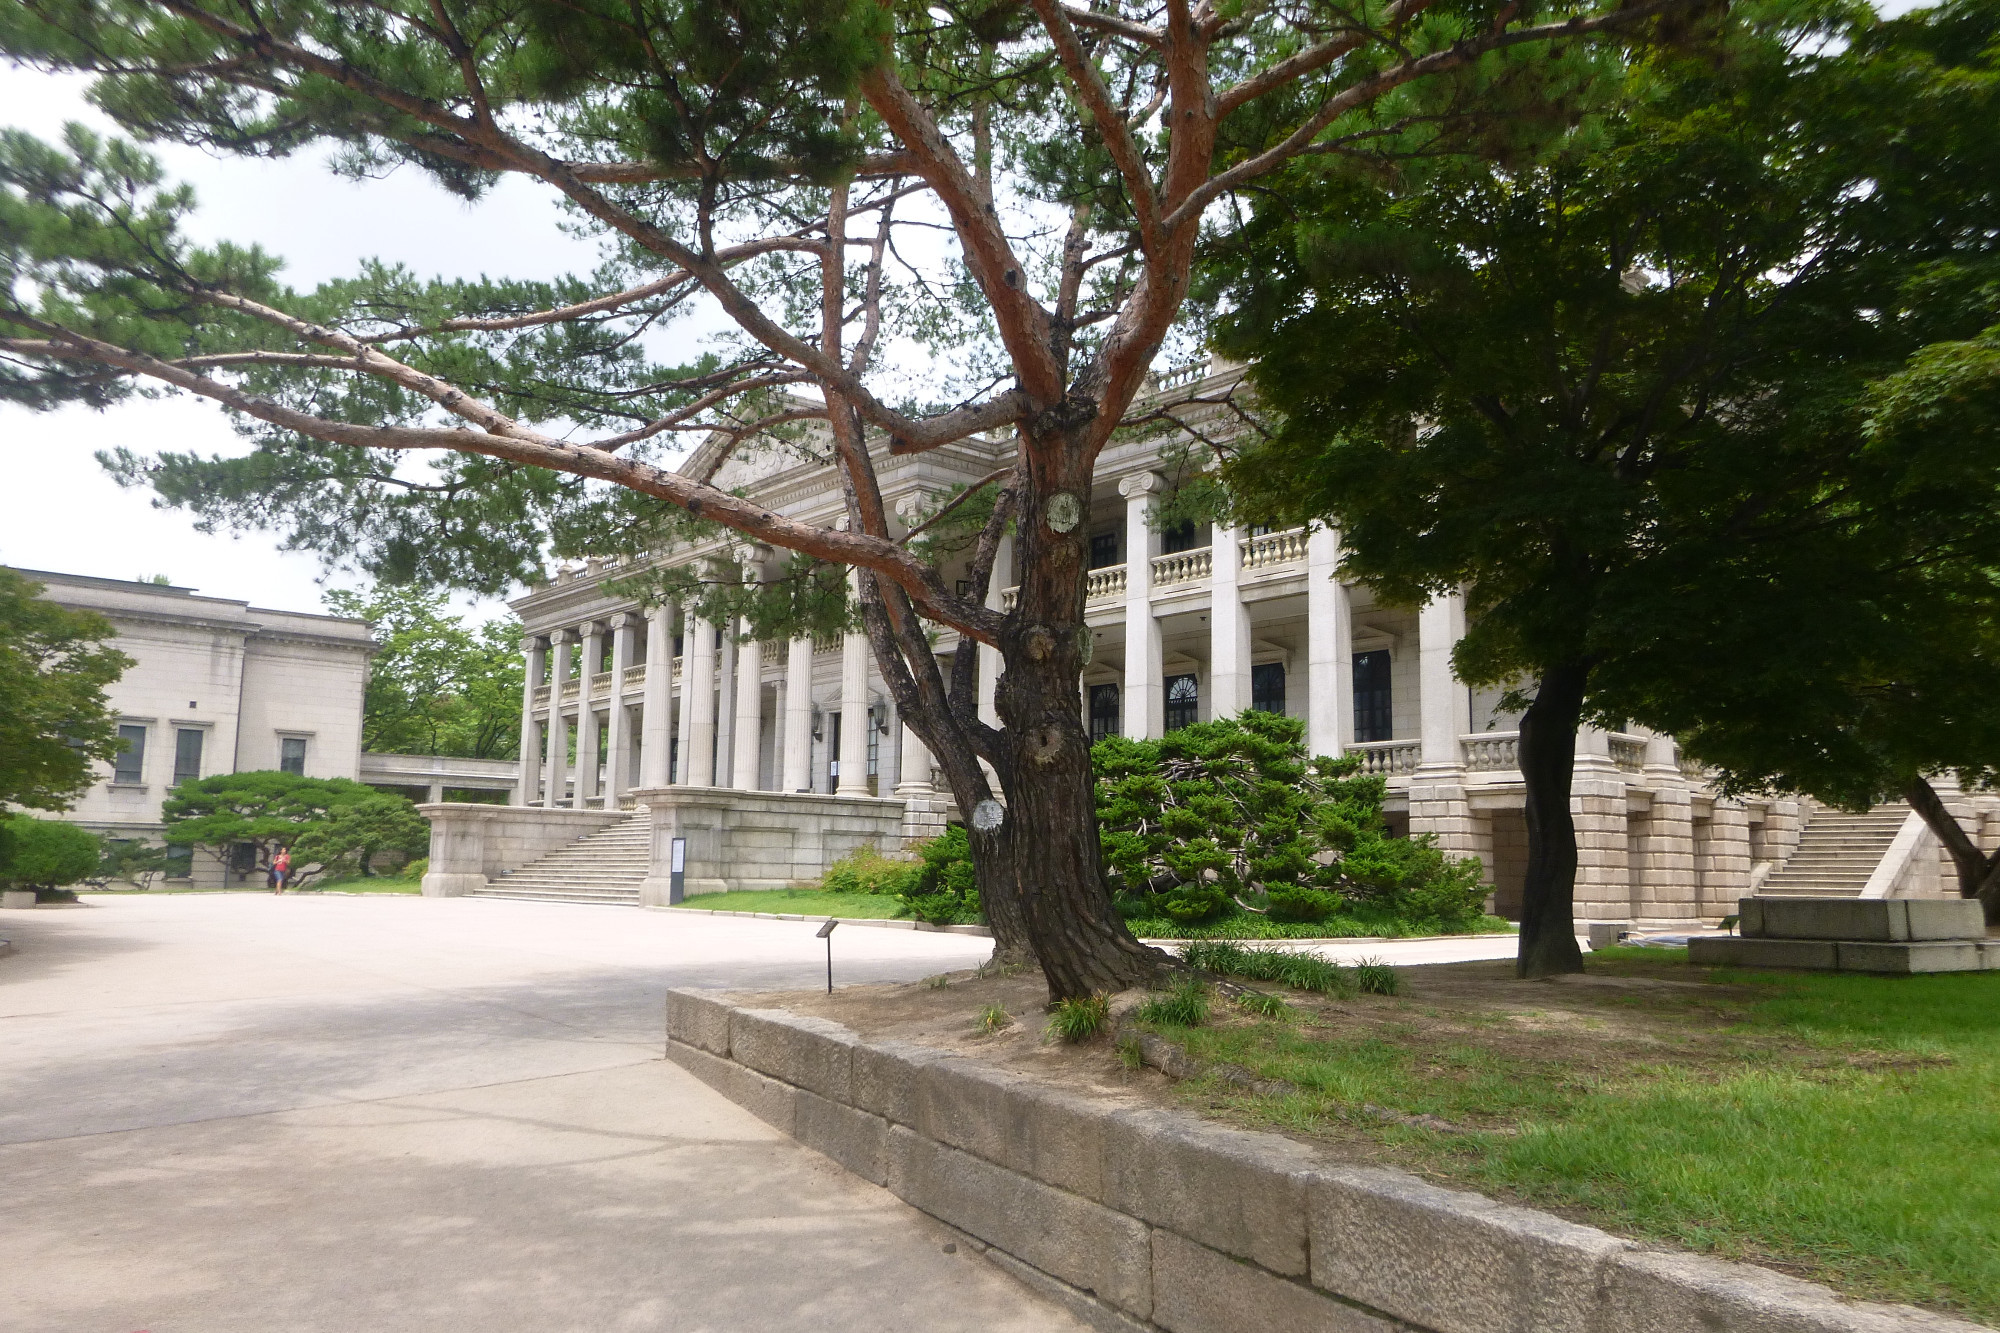 Deouksugung Palace, South Korea